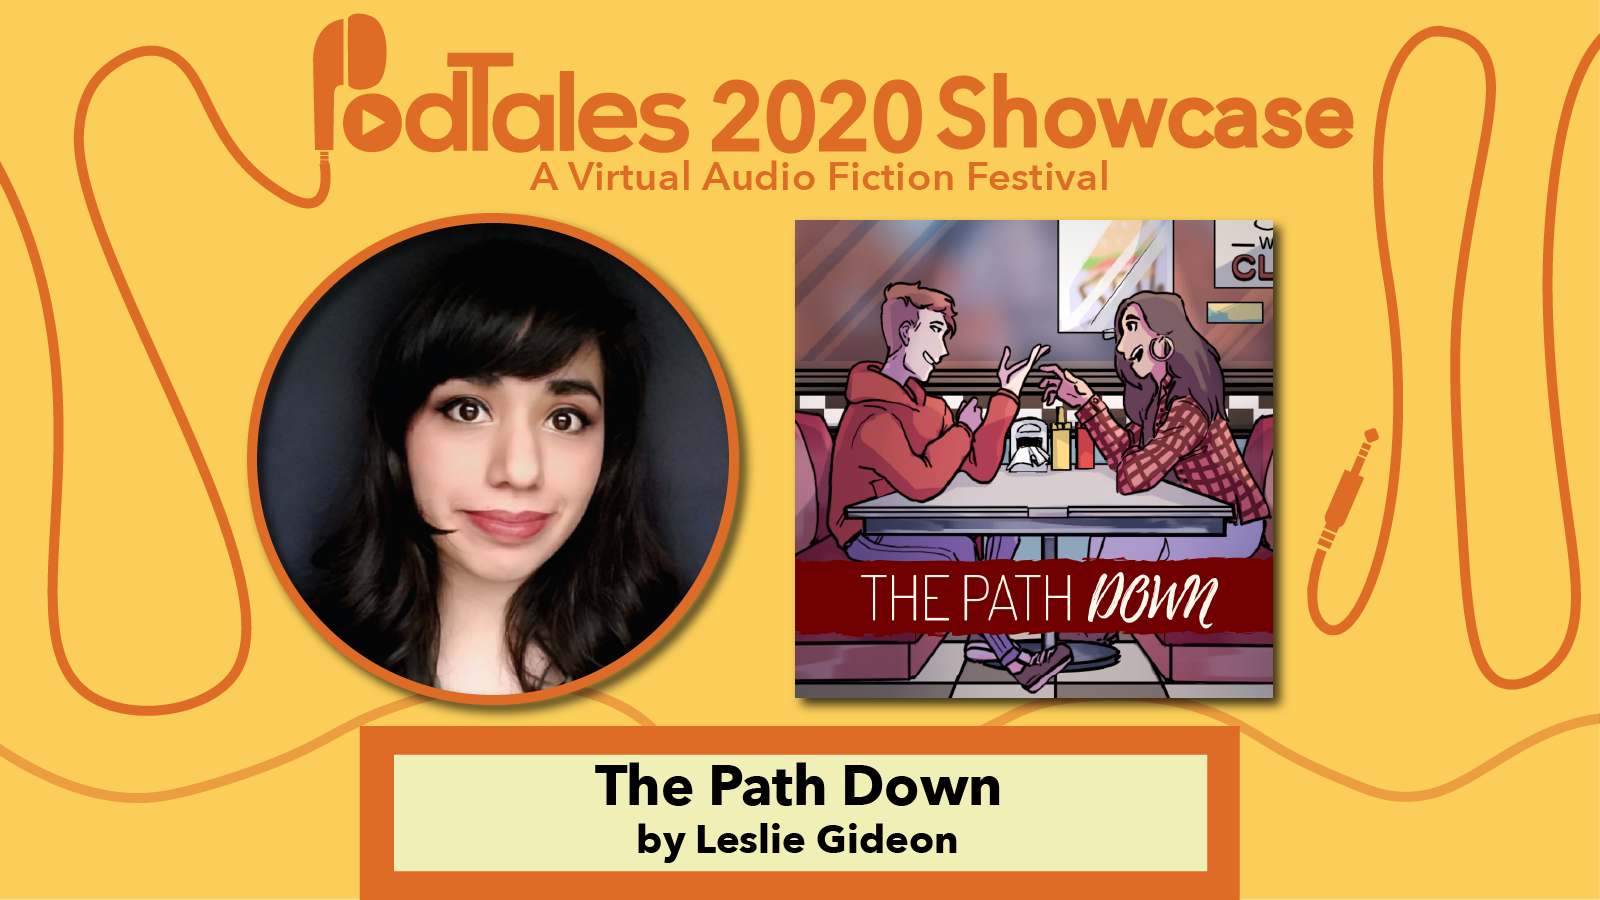 PodTales 2020 Showcase: A Virtual Audio Fiction Festival, Photo of Leslie Gideon, Photo of Show Art for The Path Down, "The Path Down by Leslie Gideon"